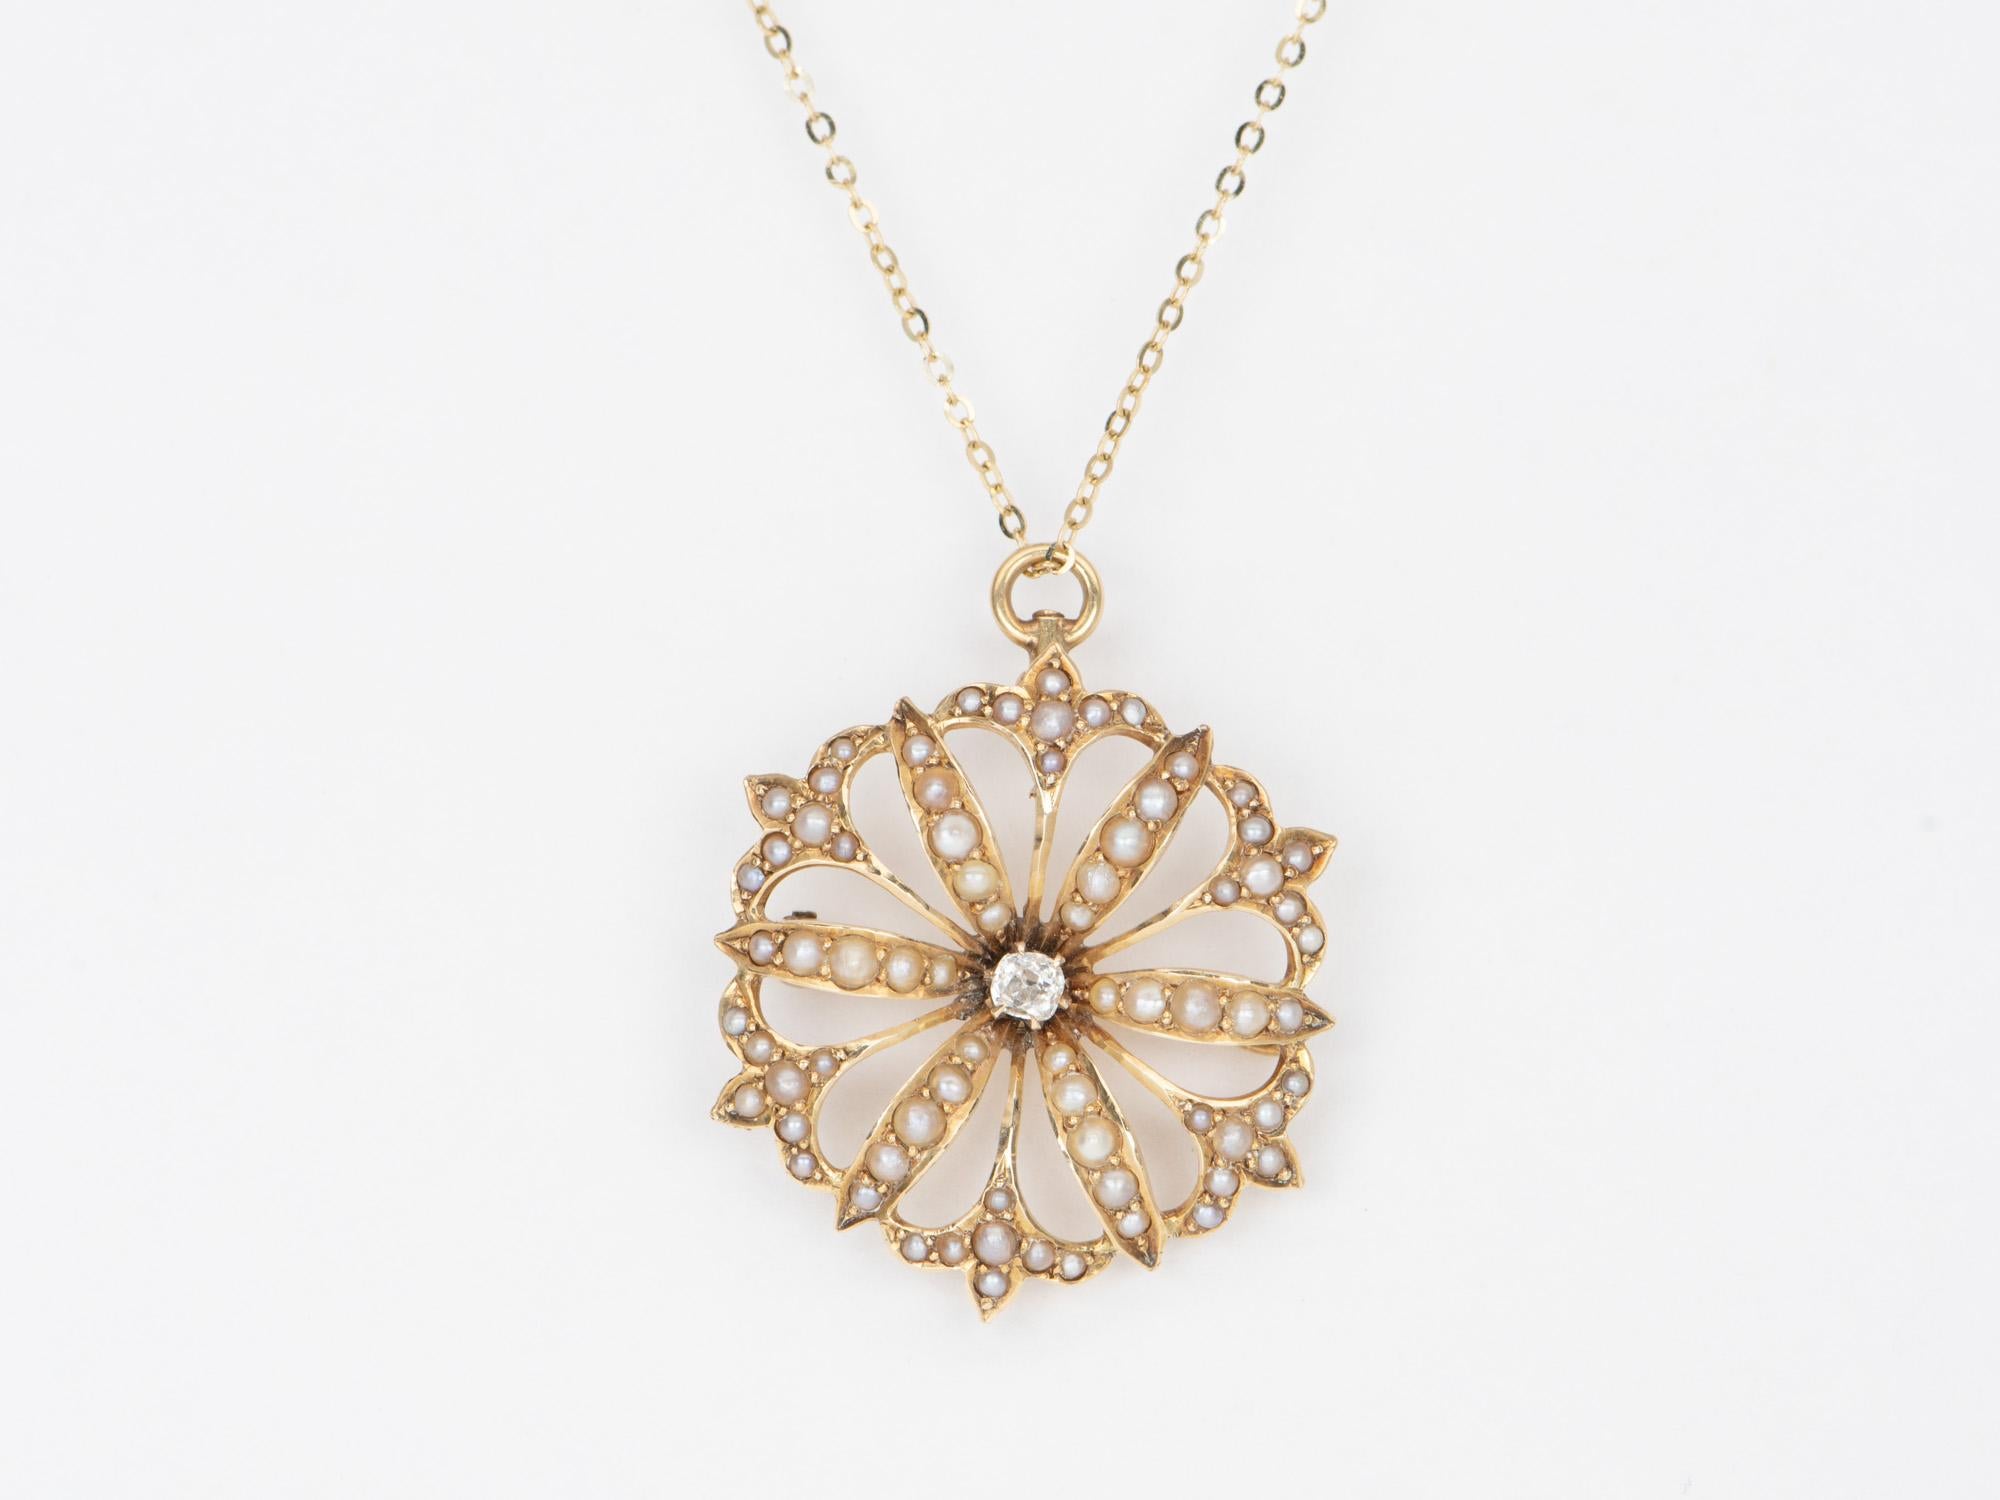 Uncut Antique Art Nouveau Seed Pearl Floral Pin Brooch Pendant 14K Gold V1088 For Sale